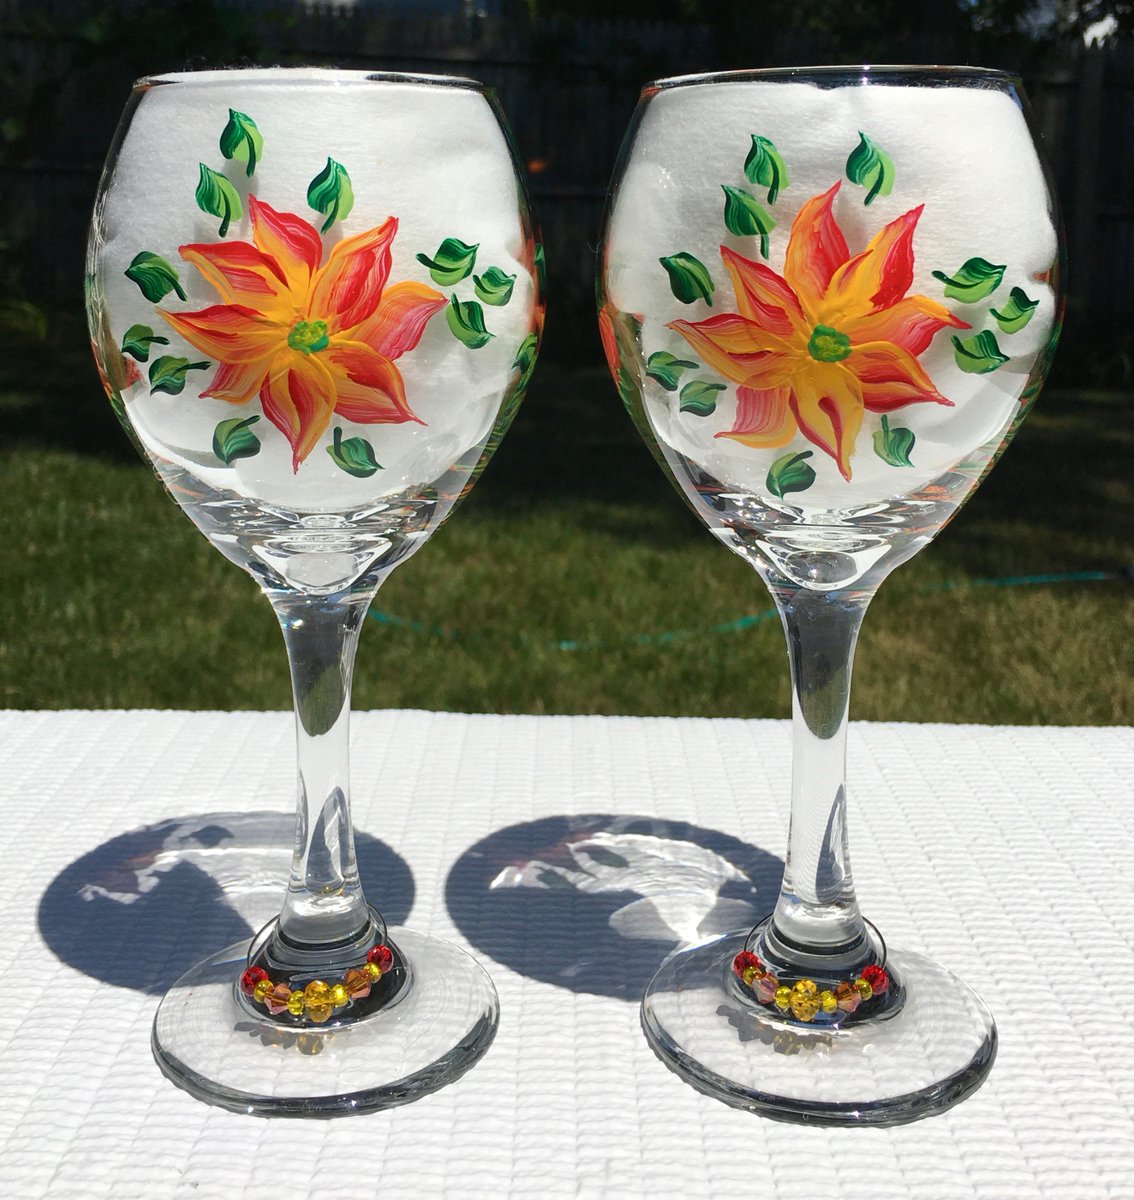 Brightly painted wine glasses etsy.com/listing/834904… #wineglasses #handpaintedglasses #art #SMILEtt23 #CraftBizParty #summerglasses #mothersdaygift #etsygifts #etsyshop